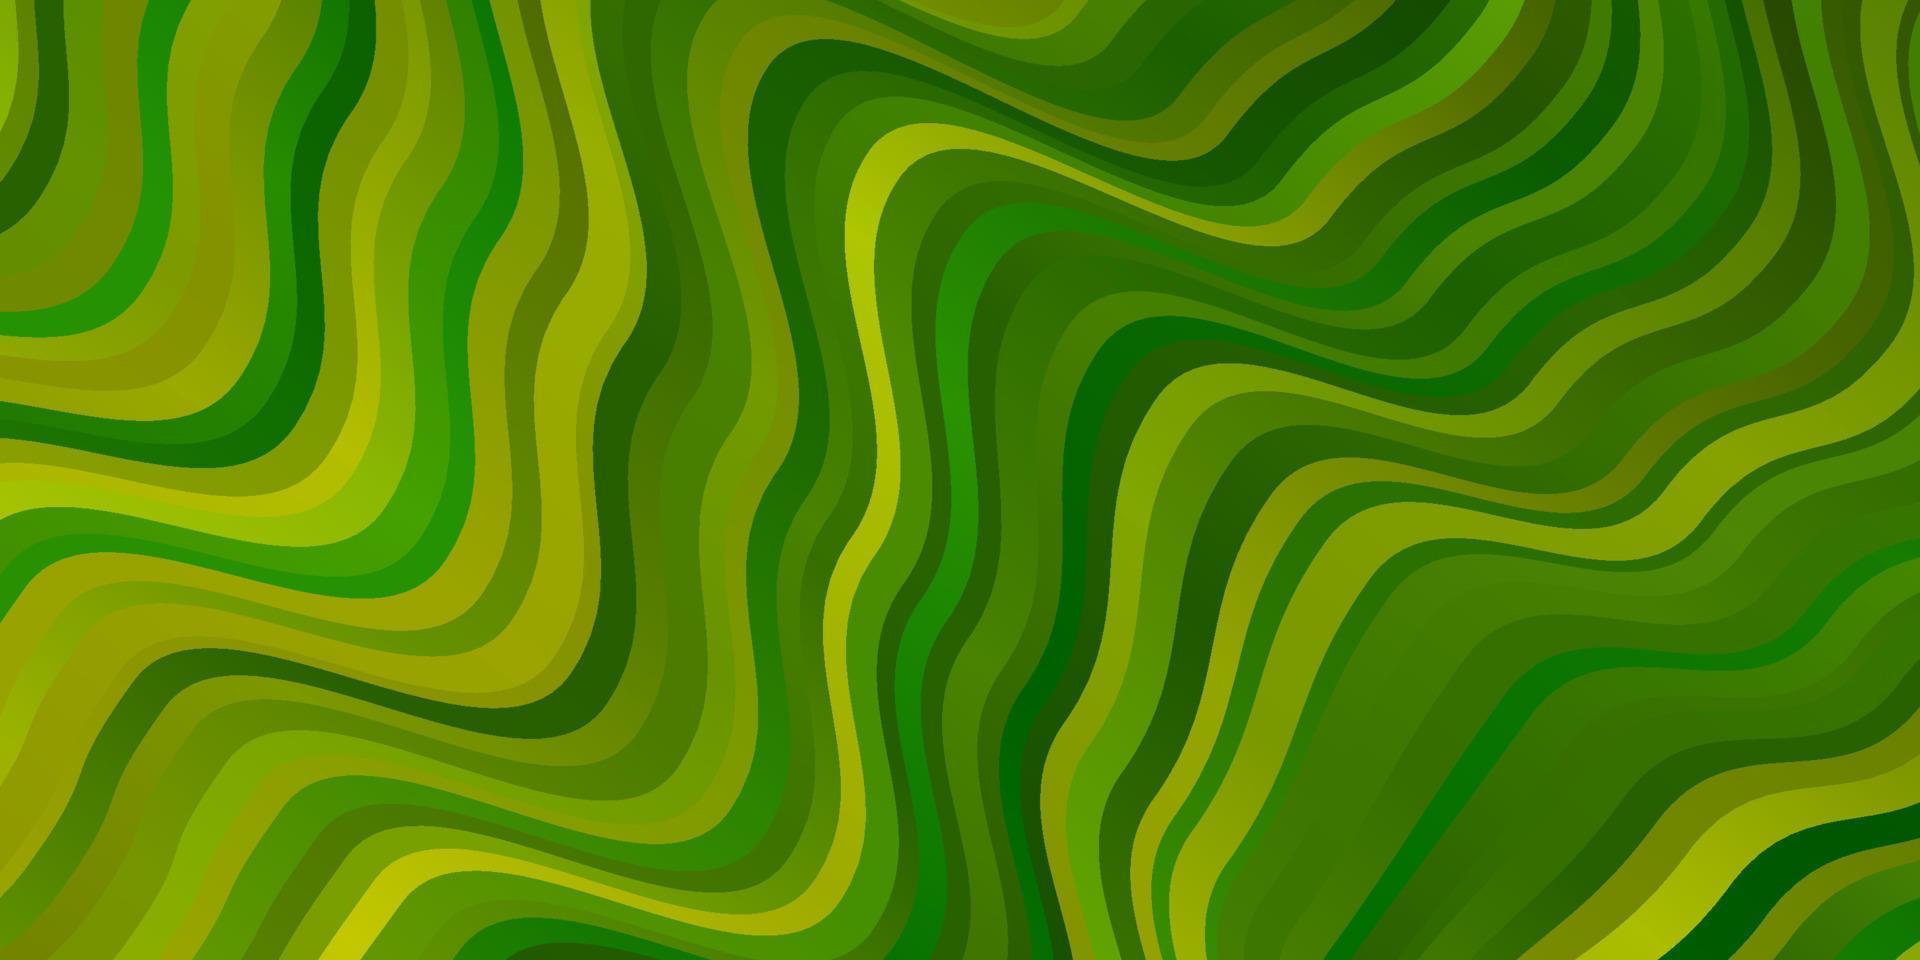 ljusgrön, gul vektorstruktur med sneda linjer. vektor